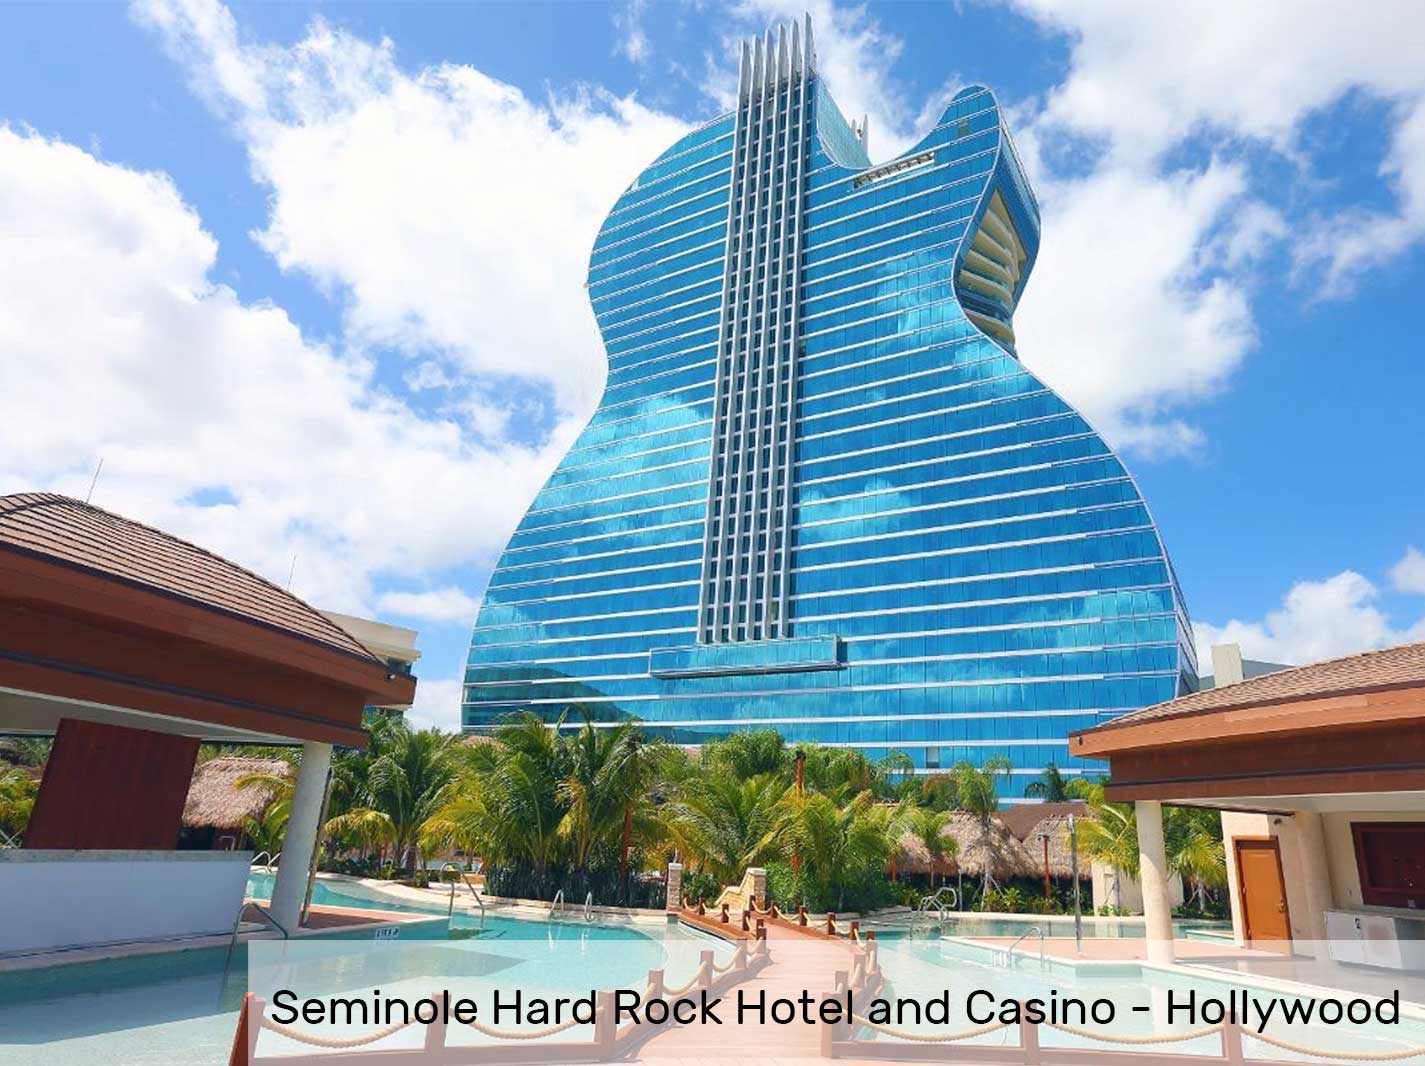 Seminole Hard Rock Hotel and Casino - Hollywood